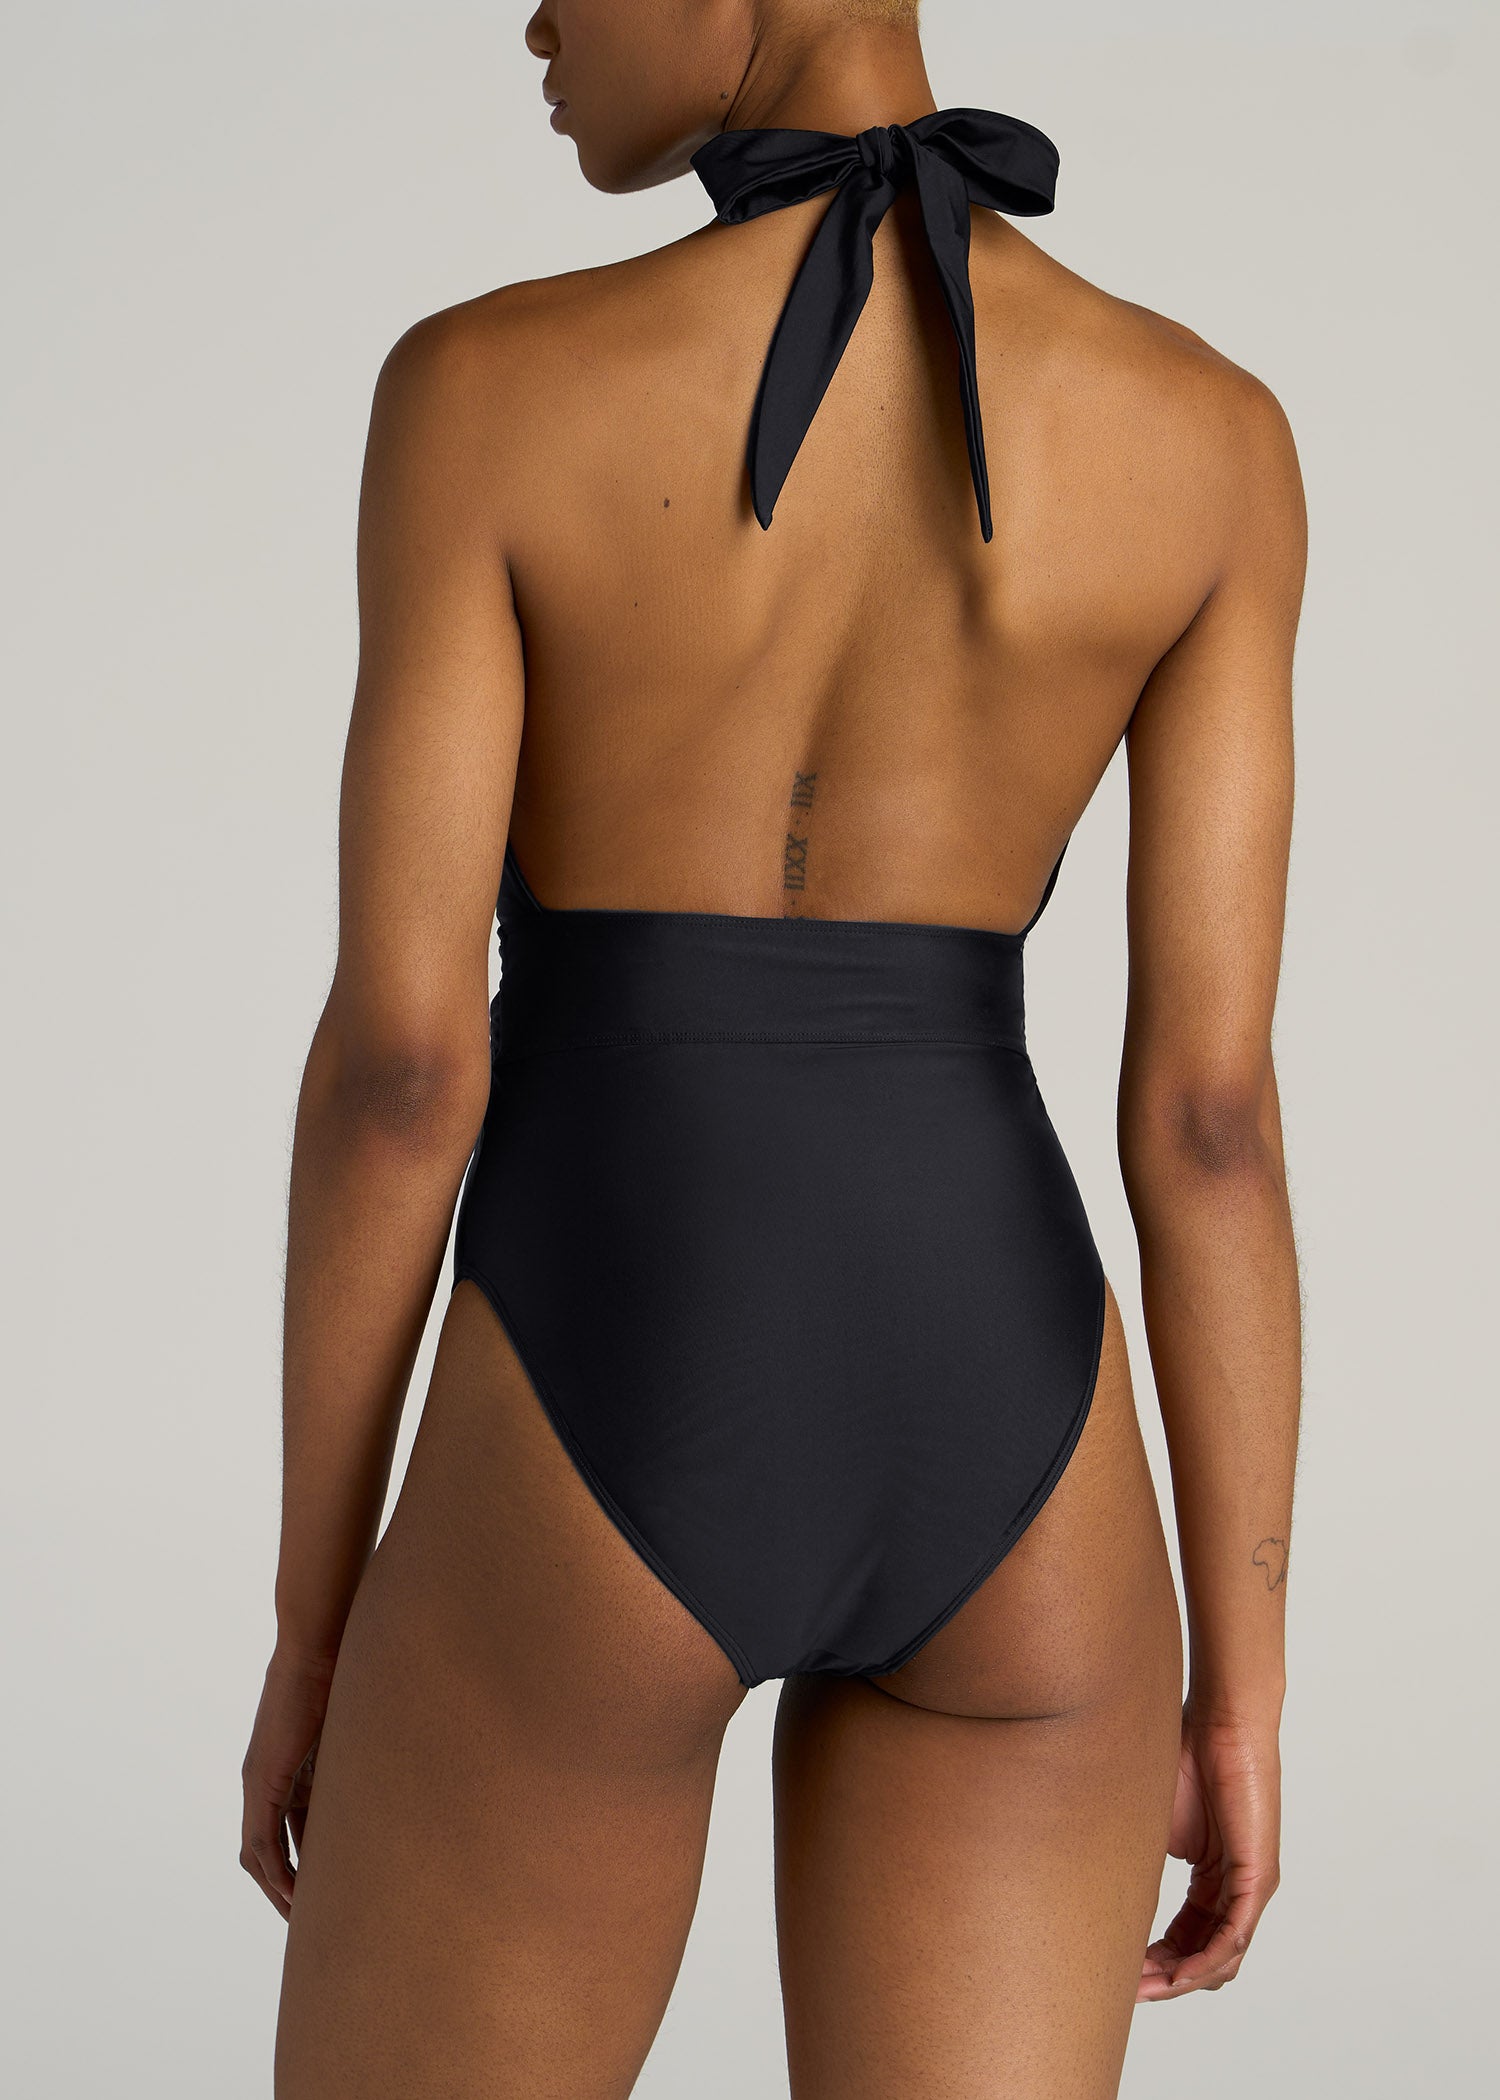 Ladies Halter Thong Bodysuit by American Apparel Cotton Spandex